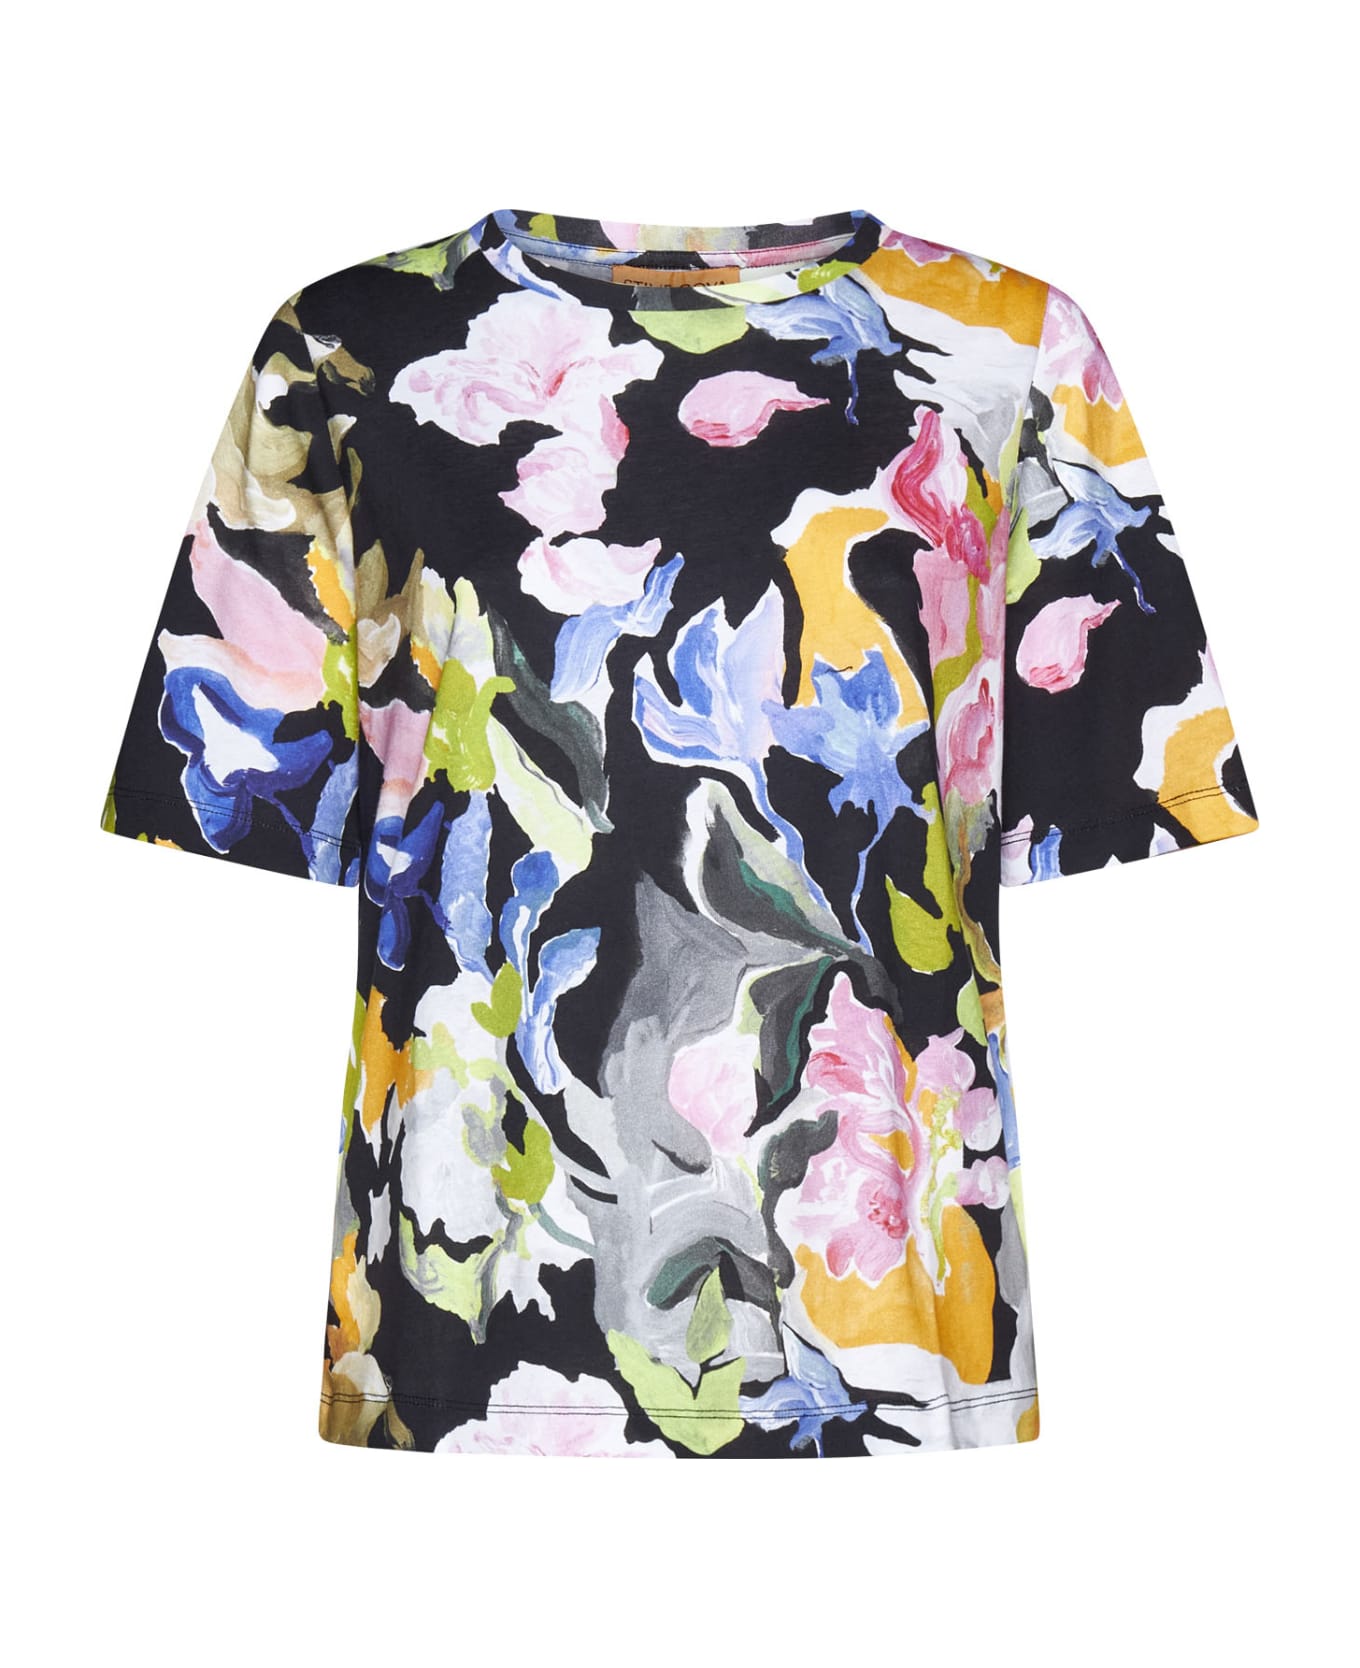 Stine Goya T-Shirt - Artistic floral Tシャツ